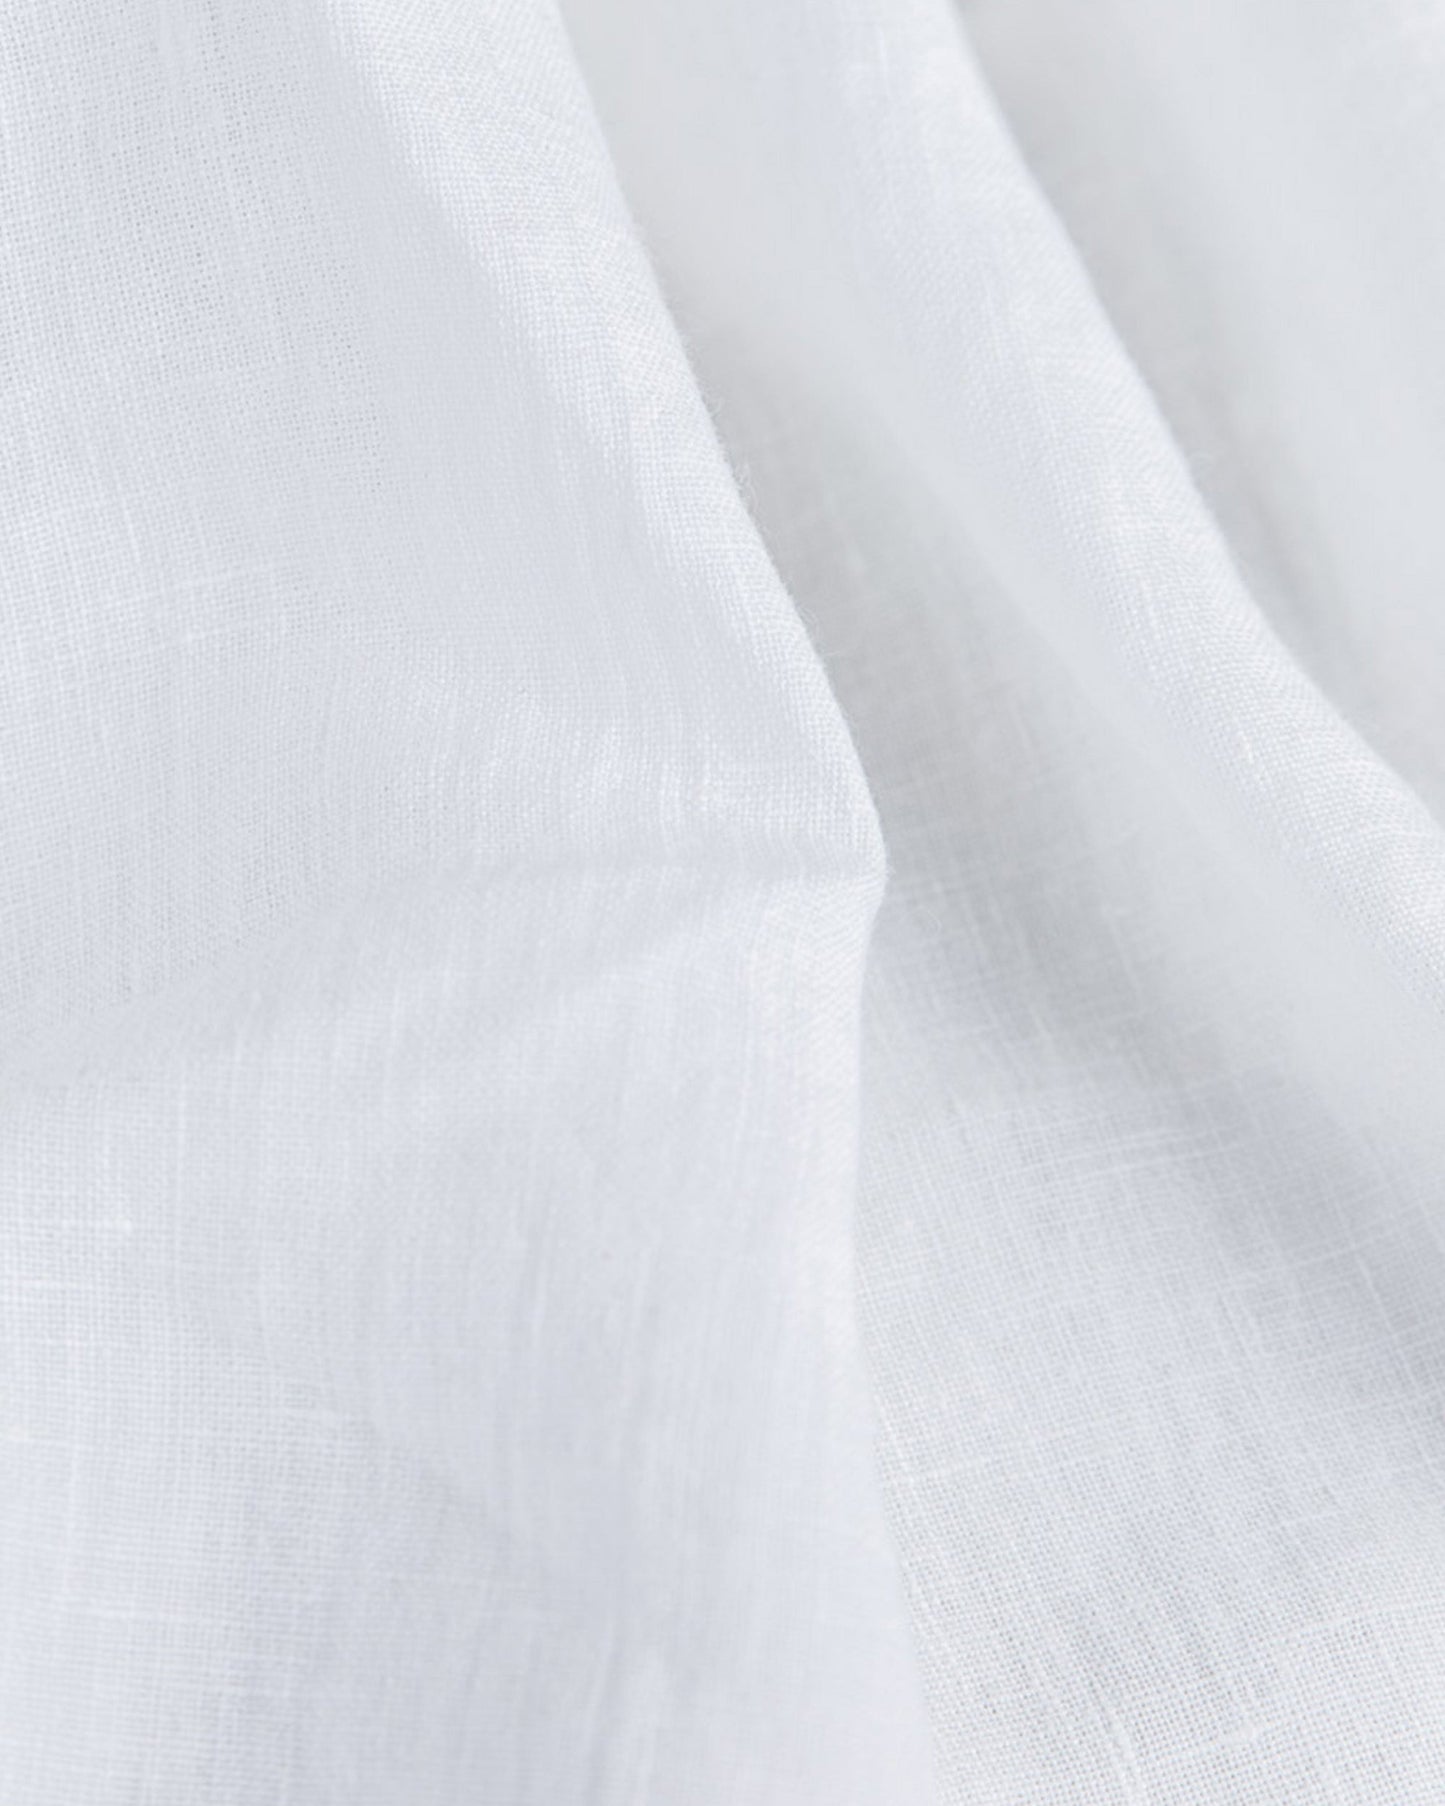 Body pillowcase in White - MagicLinen